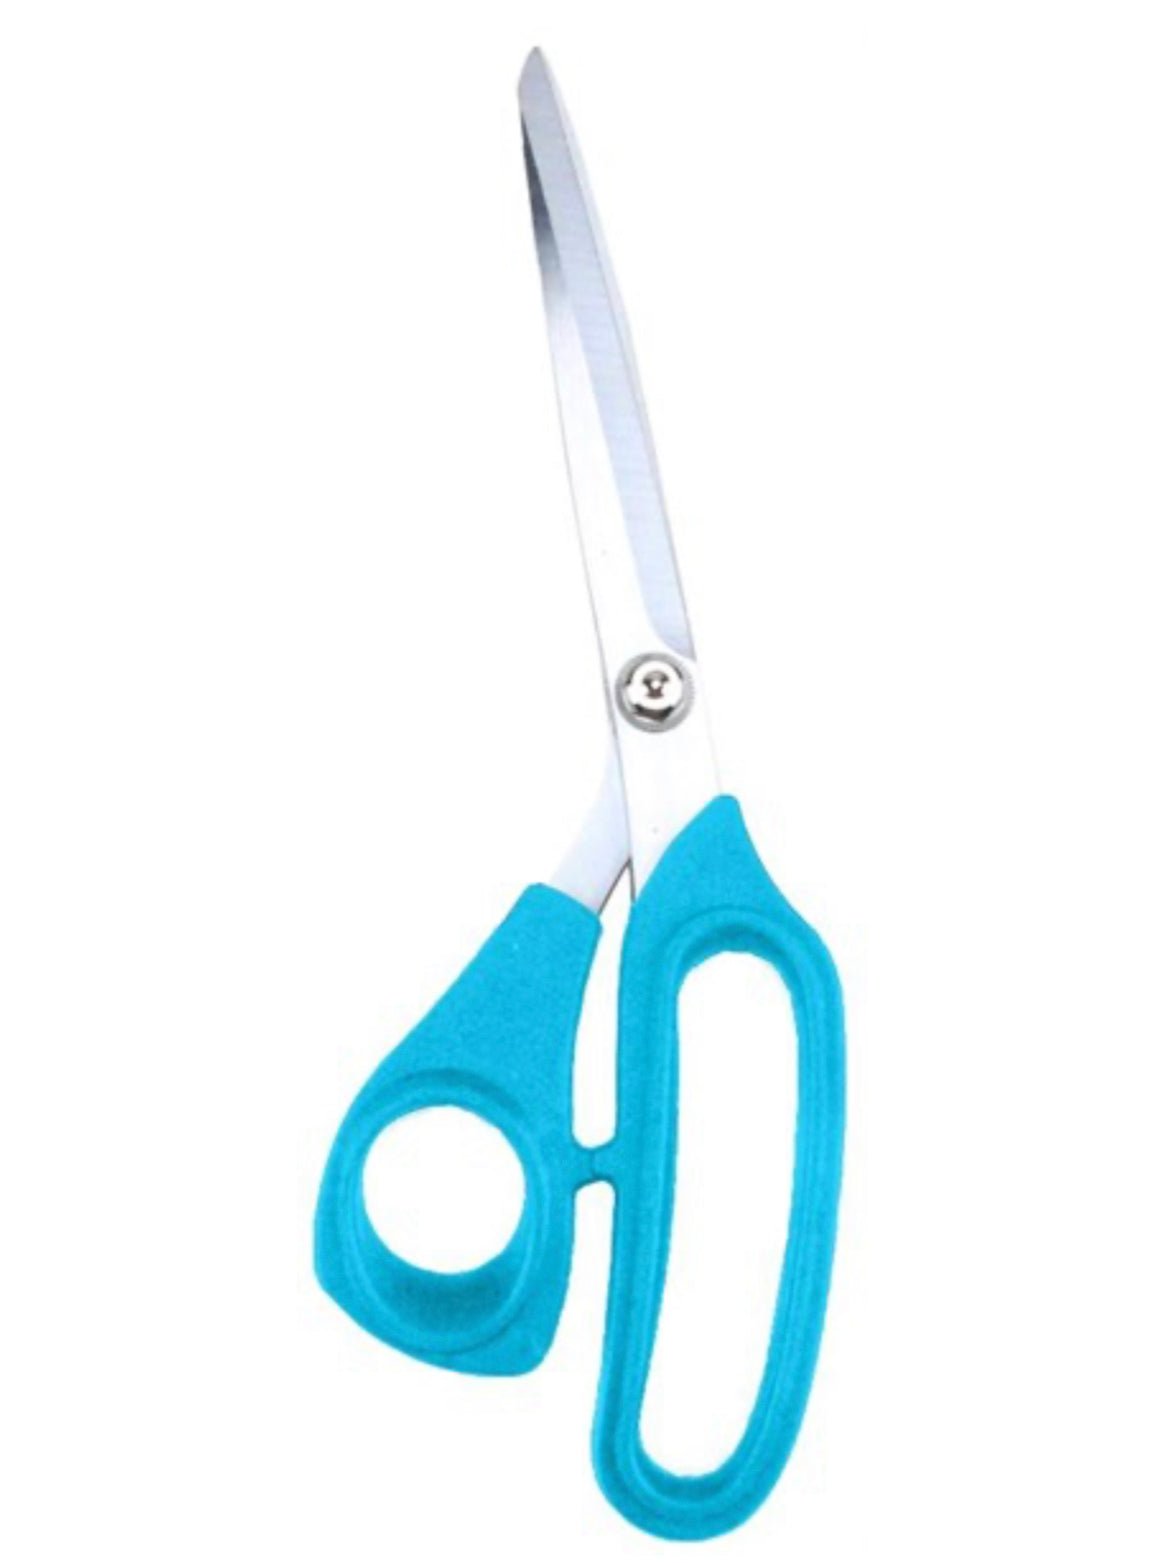 Ribbon cutting scissors - Greenery MarketCraft & Office ScissorsMT107230